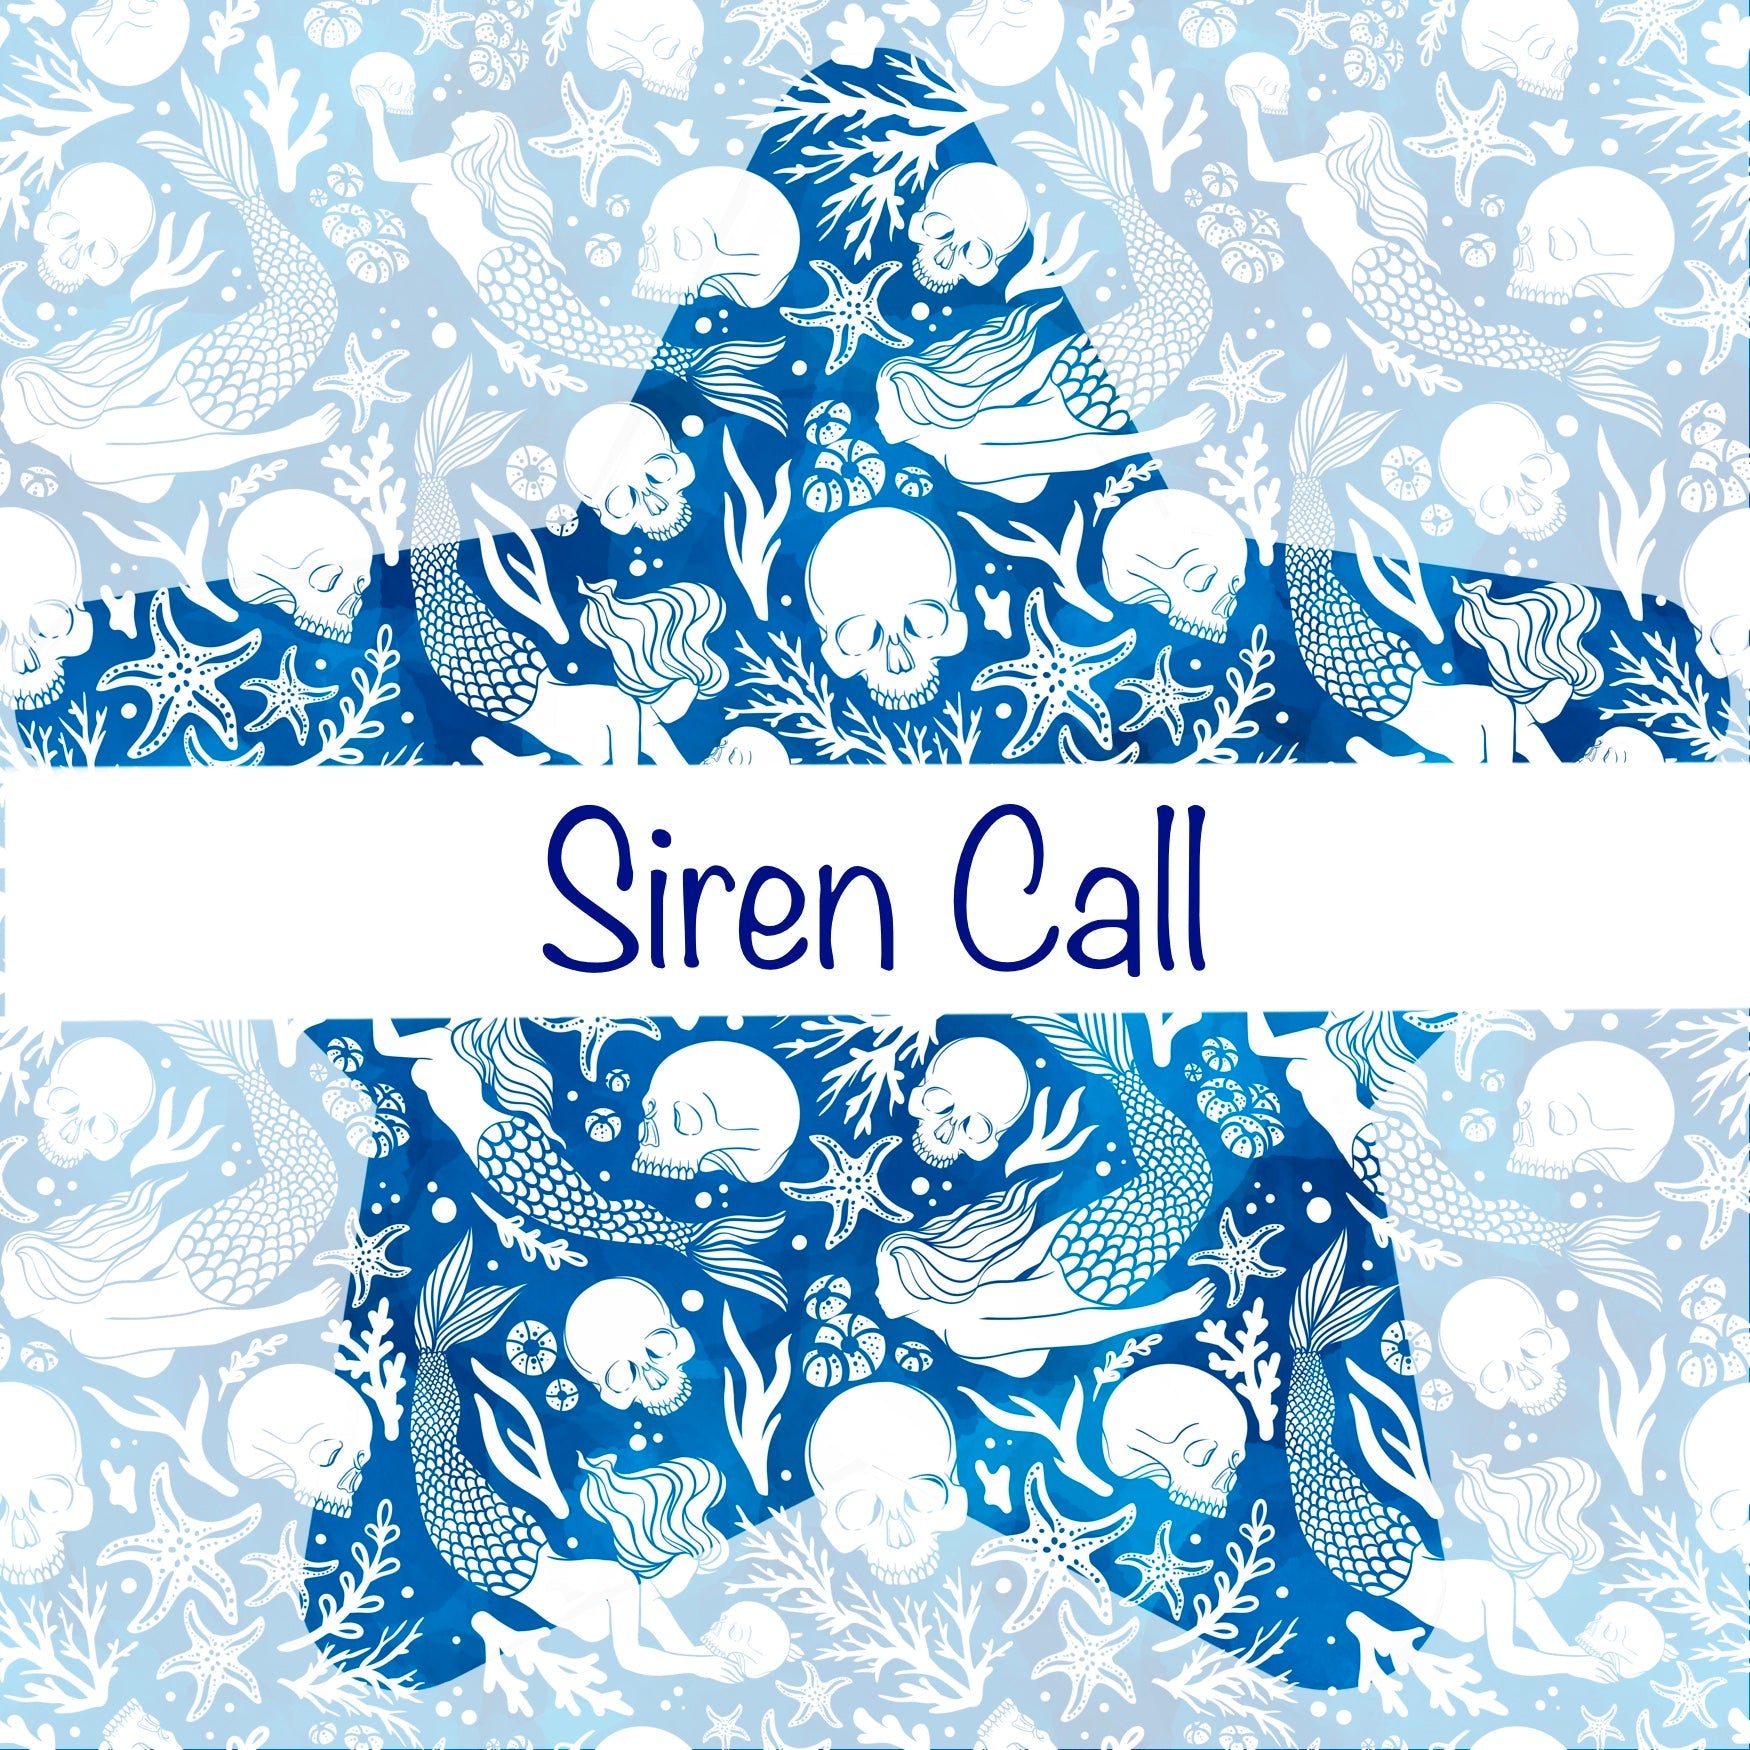 Siren Call - Day